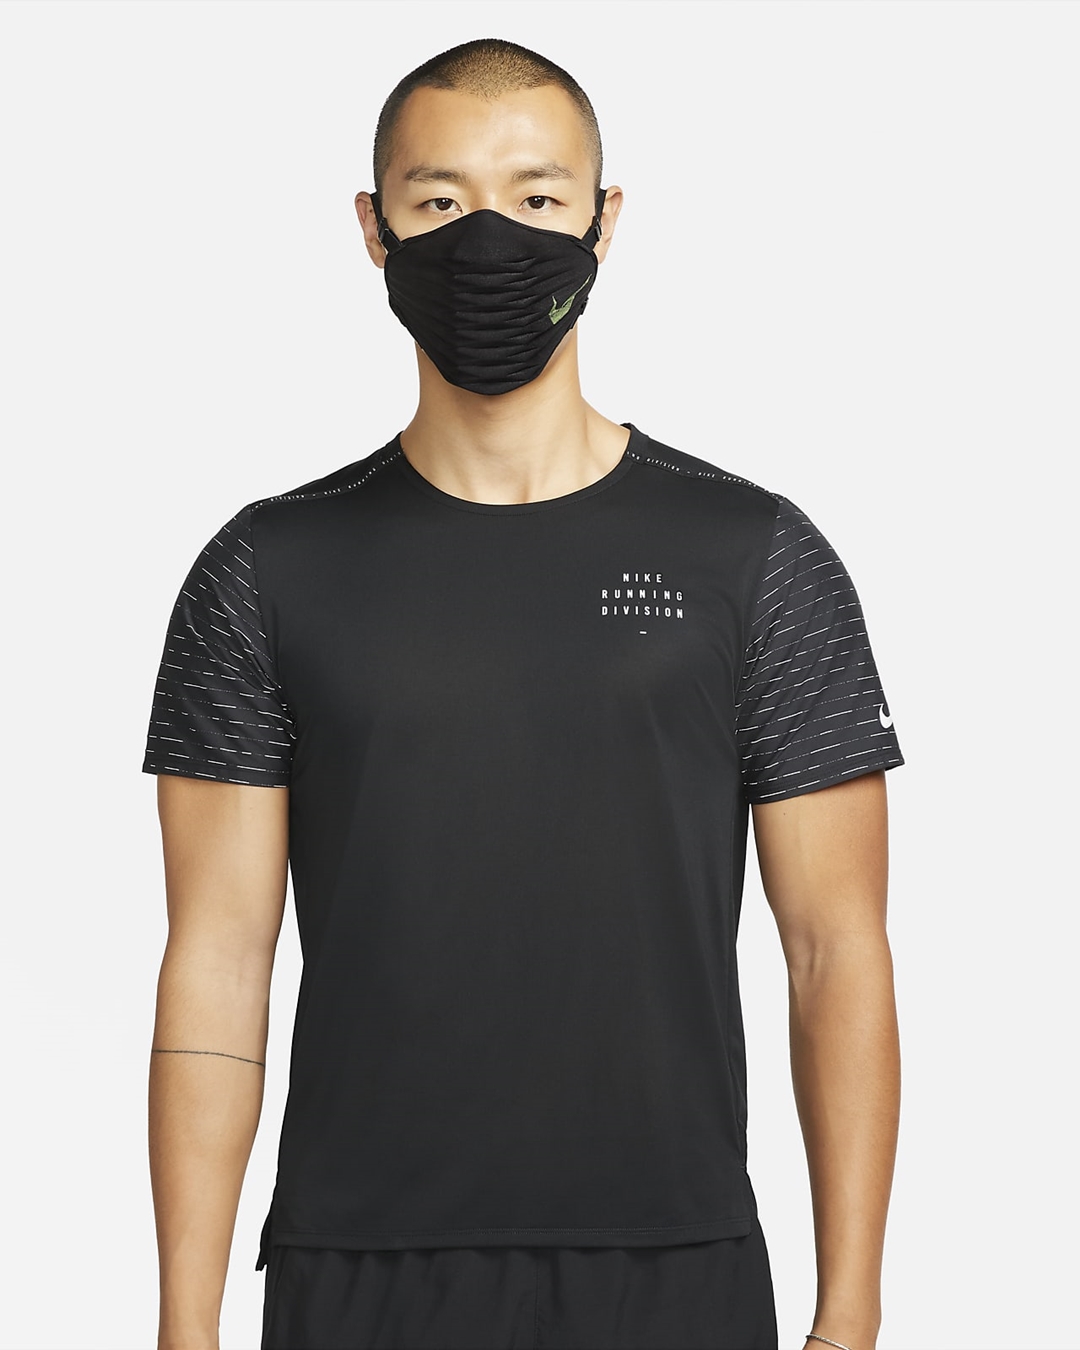 NIKE 史上初のストラップ付き高性能マスク「ナイキ ベンチュラー」が発売 (Venturer Performance Face Mask) [DO8356-010]